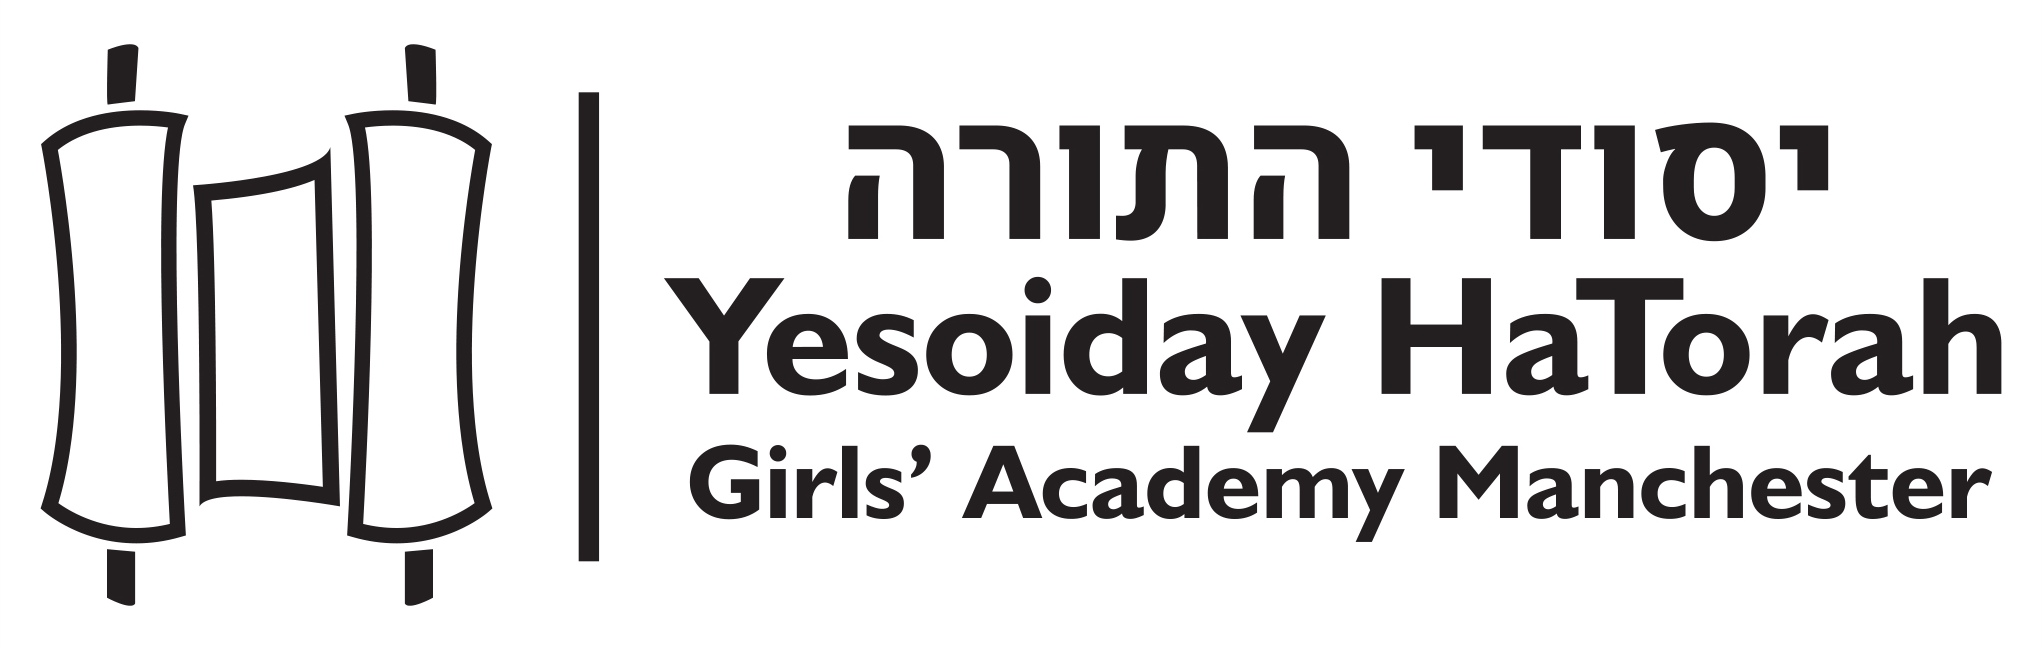 Yesoiday Hatorah Girls Academy